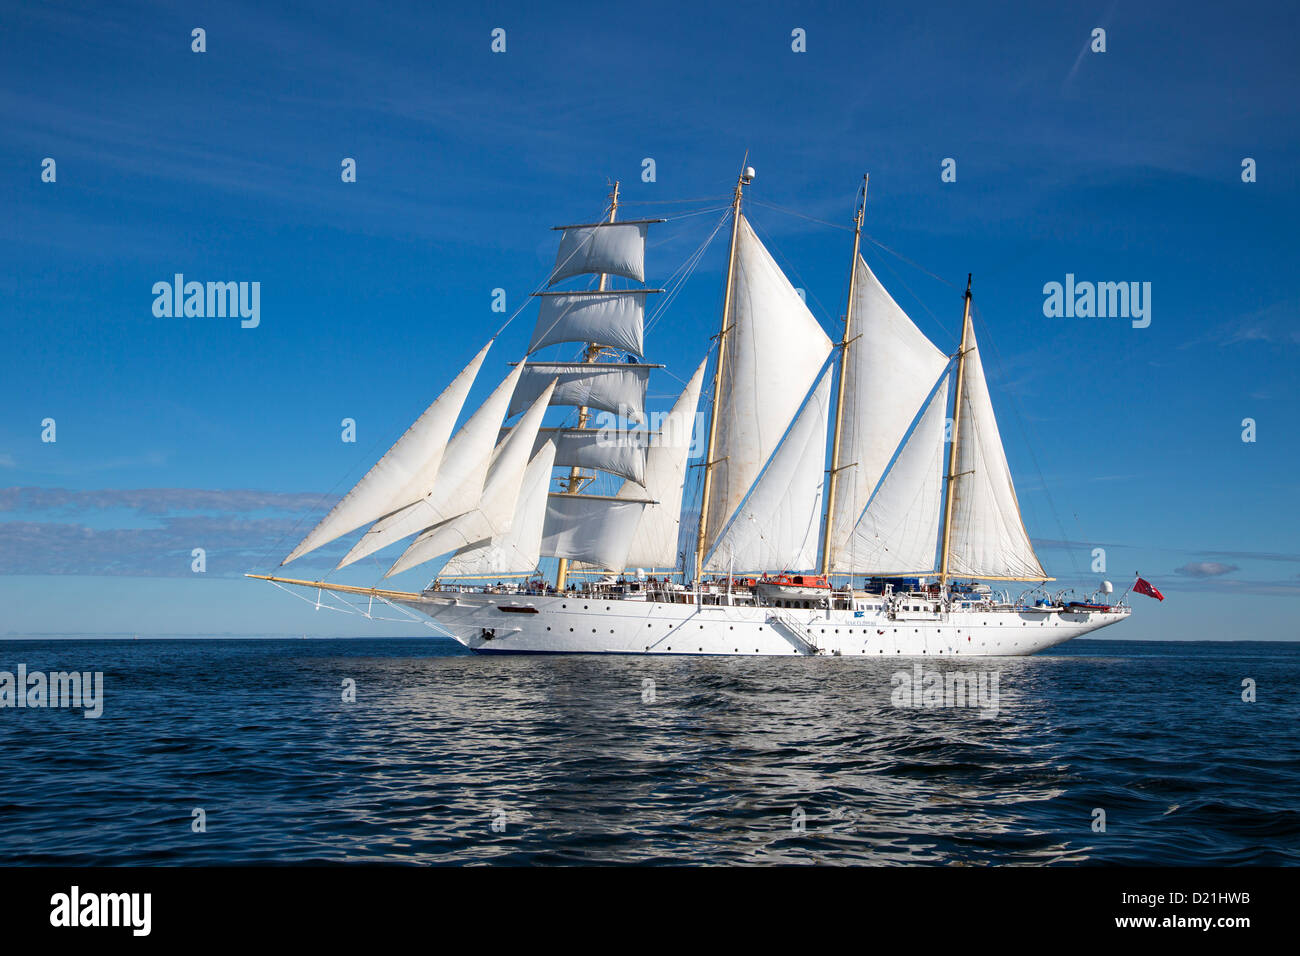 Sailing cruise ship Star Flyer under full sail, Baltic Sea, Finland, Europe Stock Photo